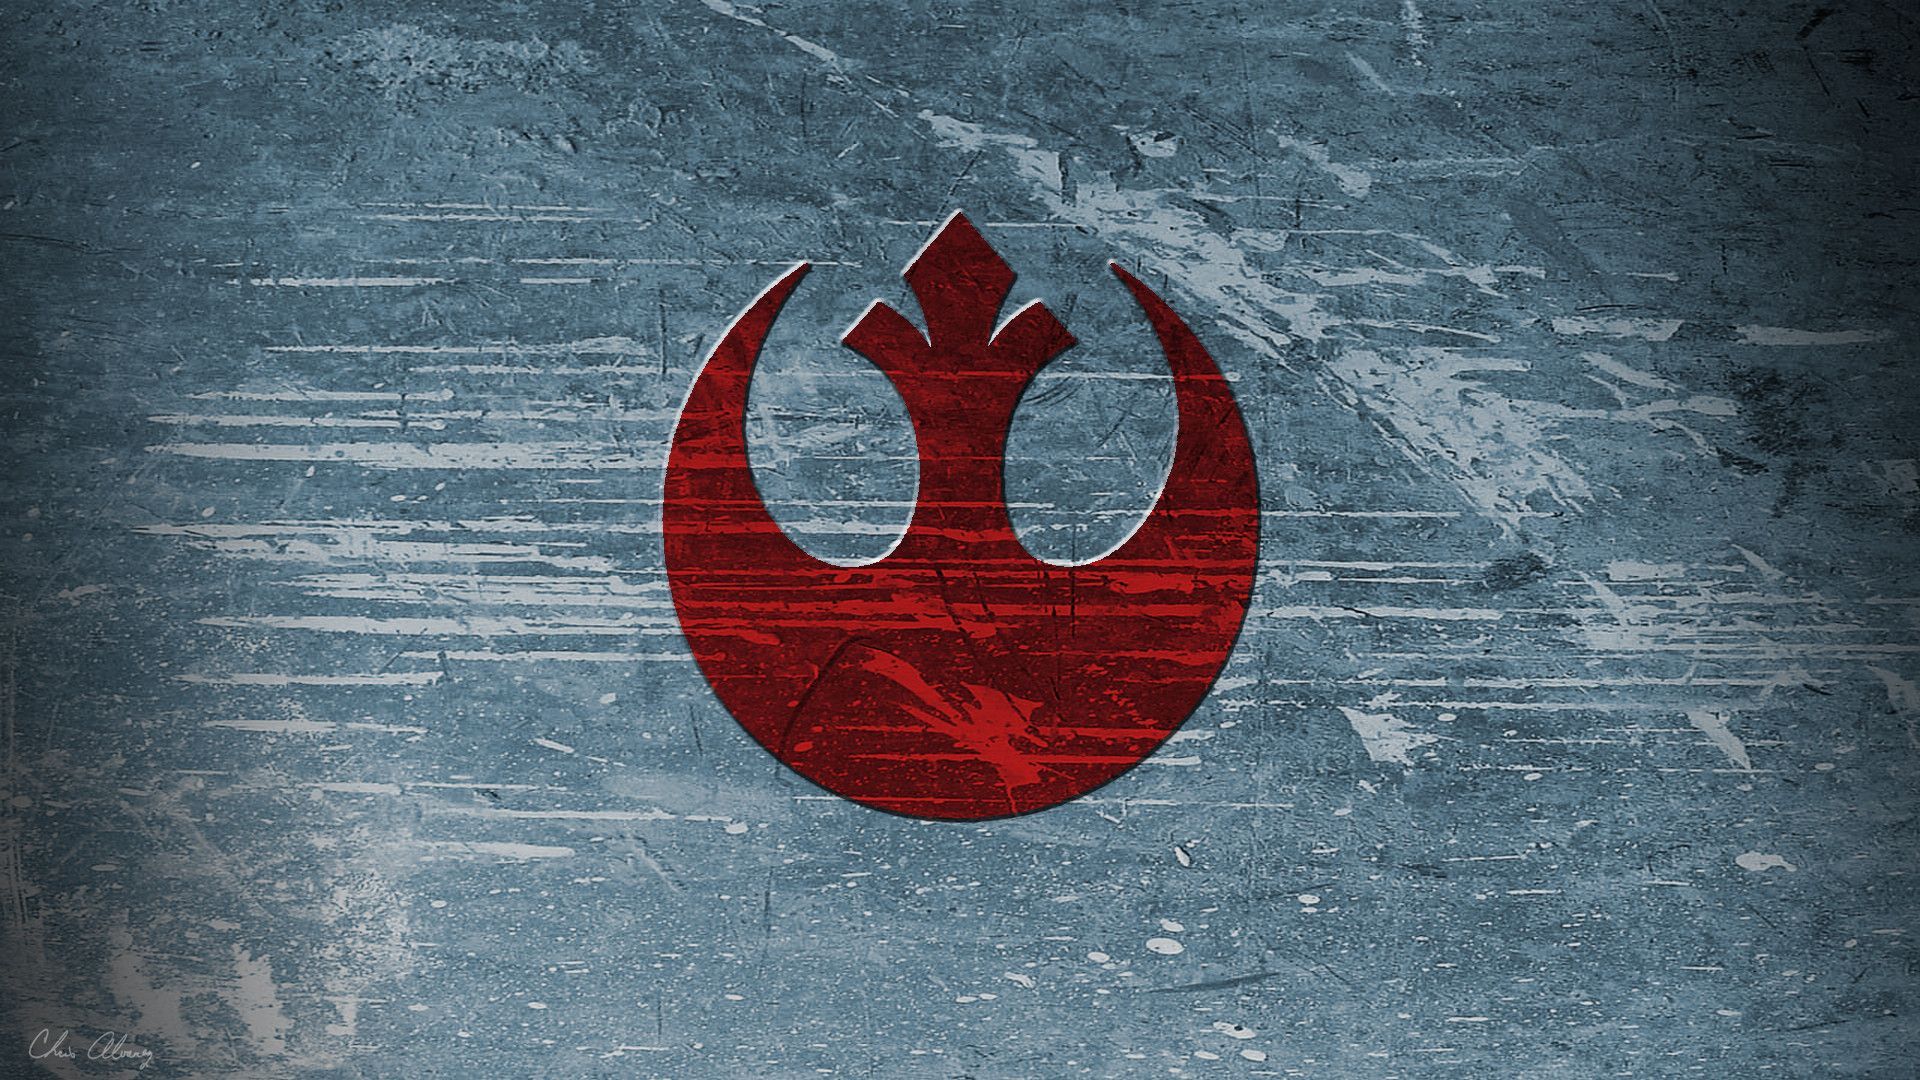 Star Wars Rebel Alliance Logo by Gazomg on DeviantArt